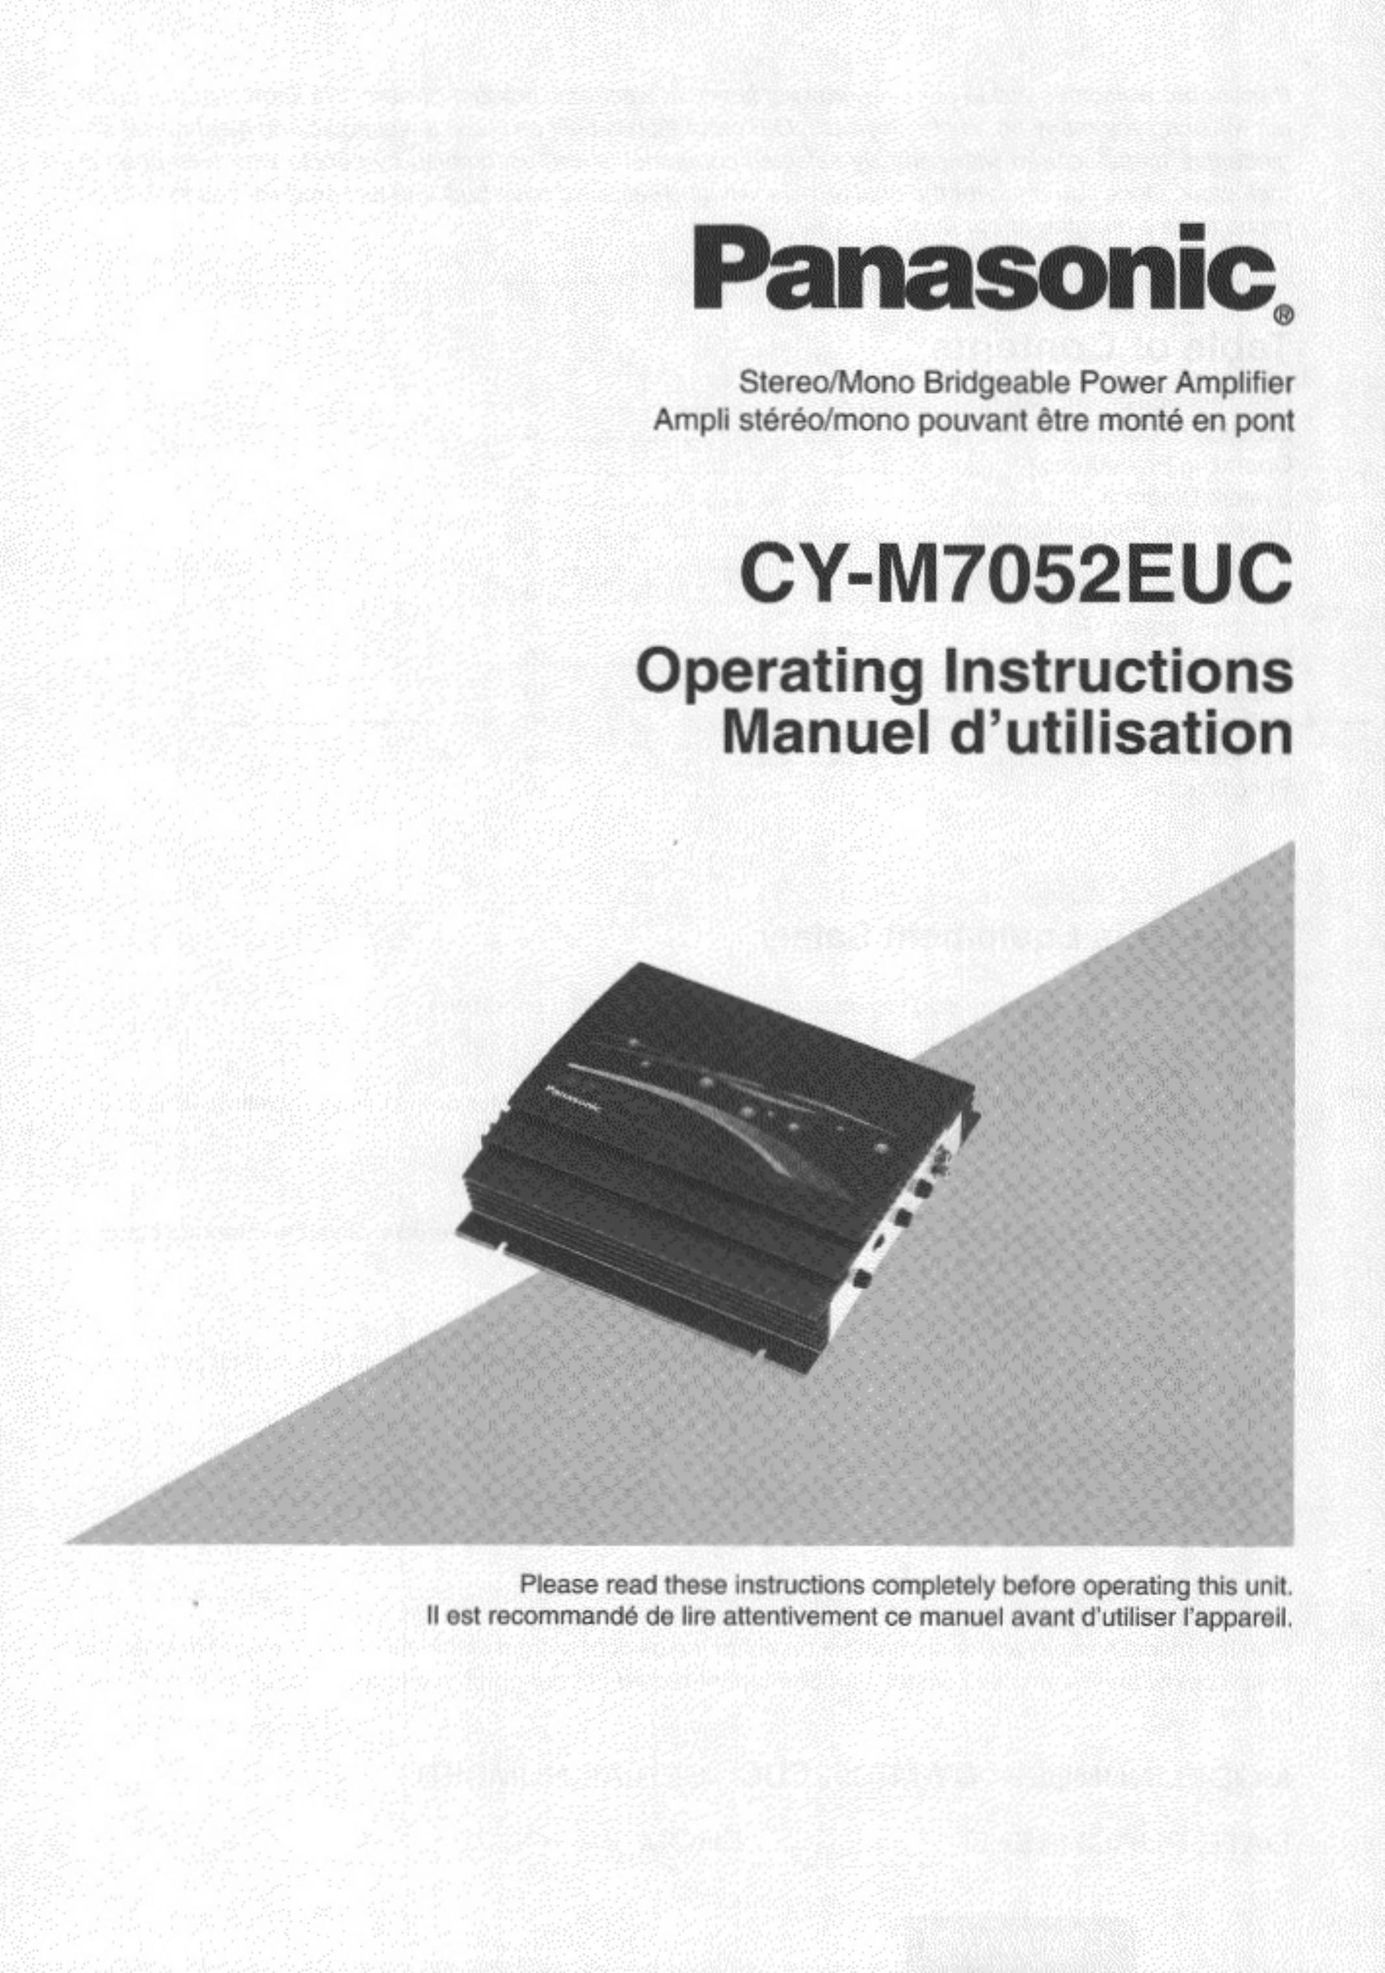 Panasonic cy-m7052euc Stereo Amplifier User Manual